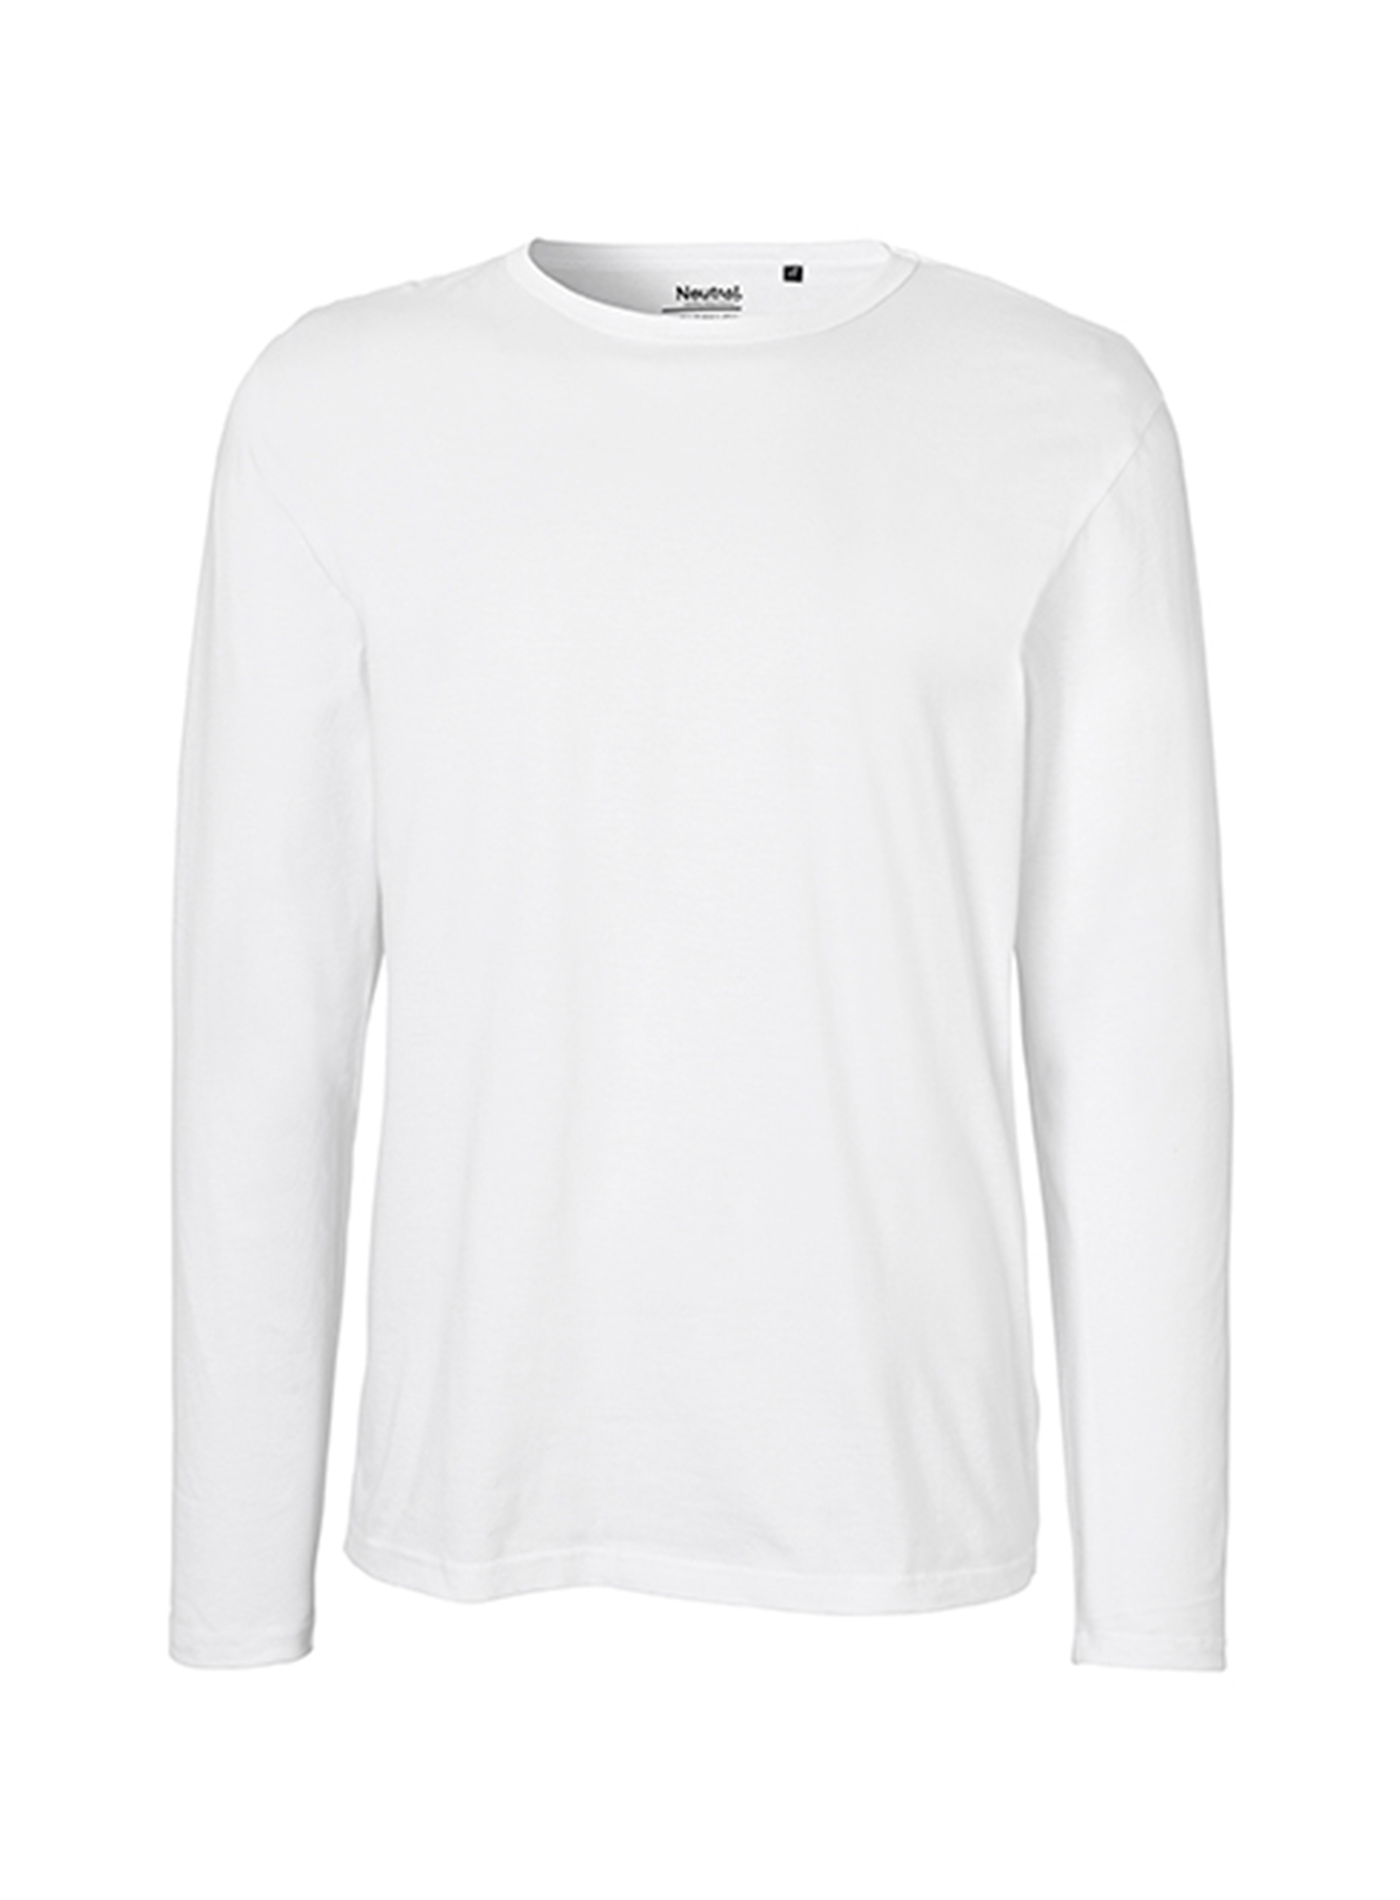 Pánské tričko s dlouhým rukávem Neutral - Bílá 3XL